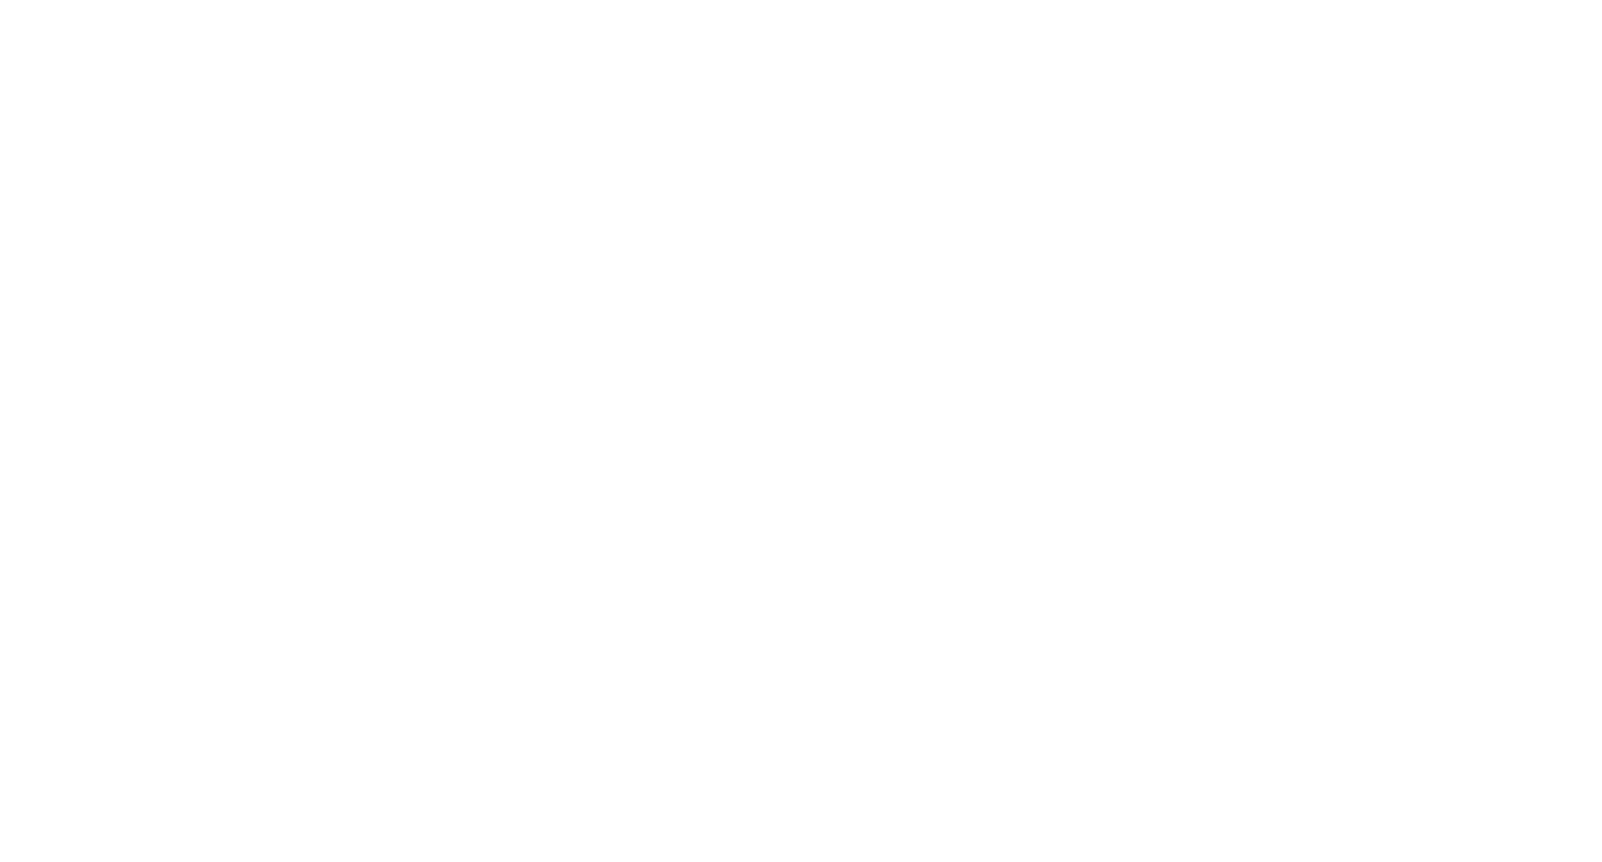 Buildings that make communities thrive